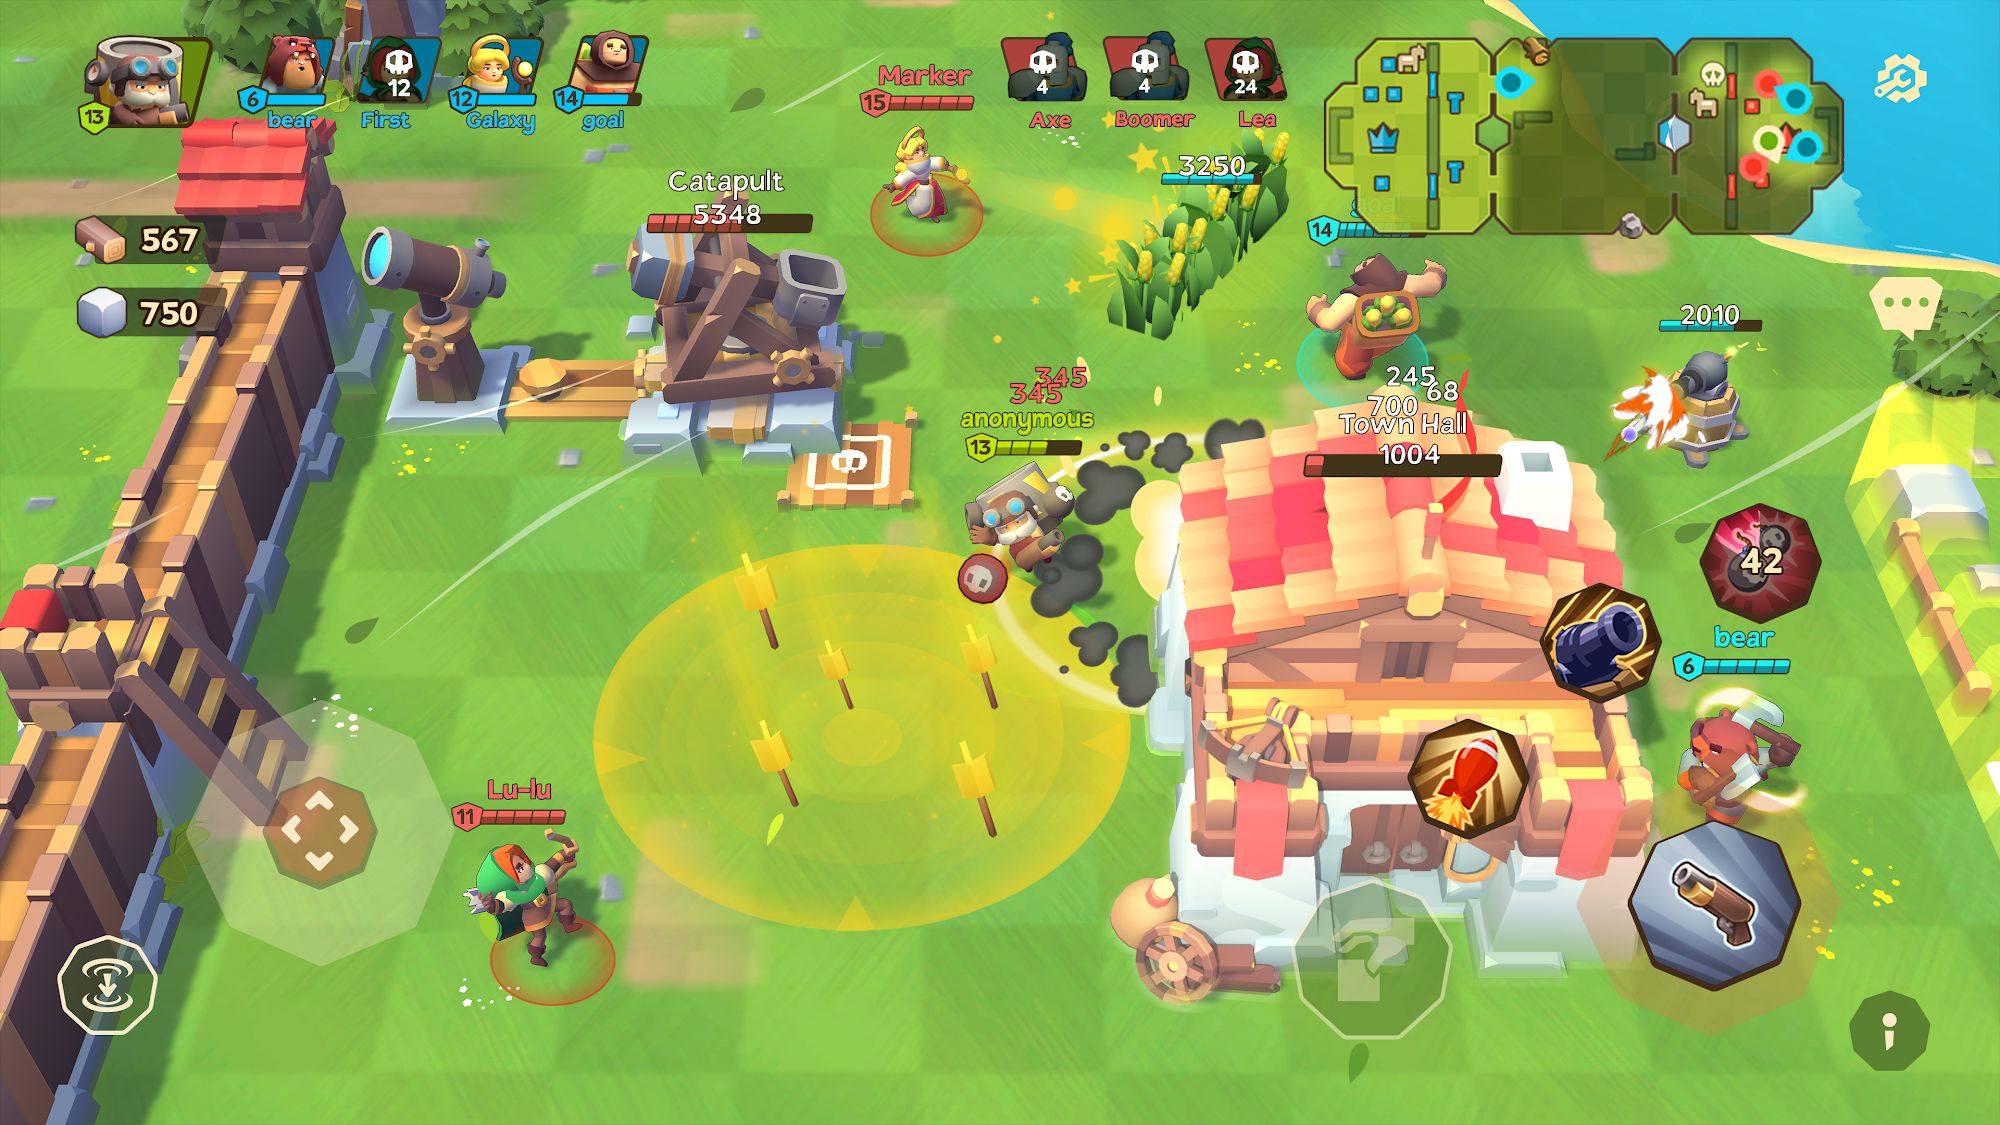 MiniLife: Tournament - Android game screenshots.